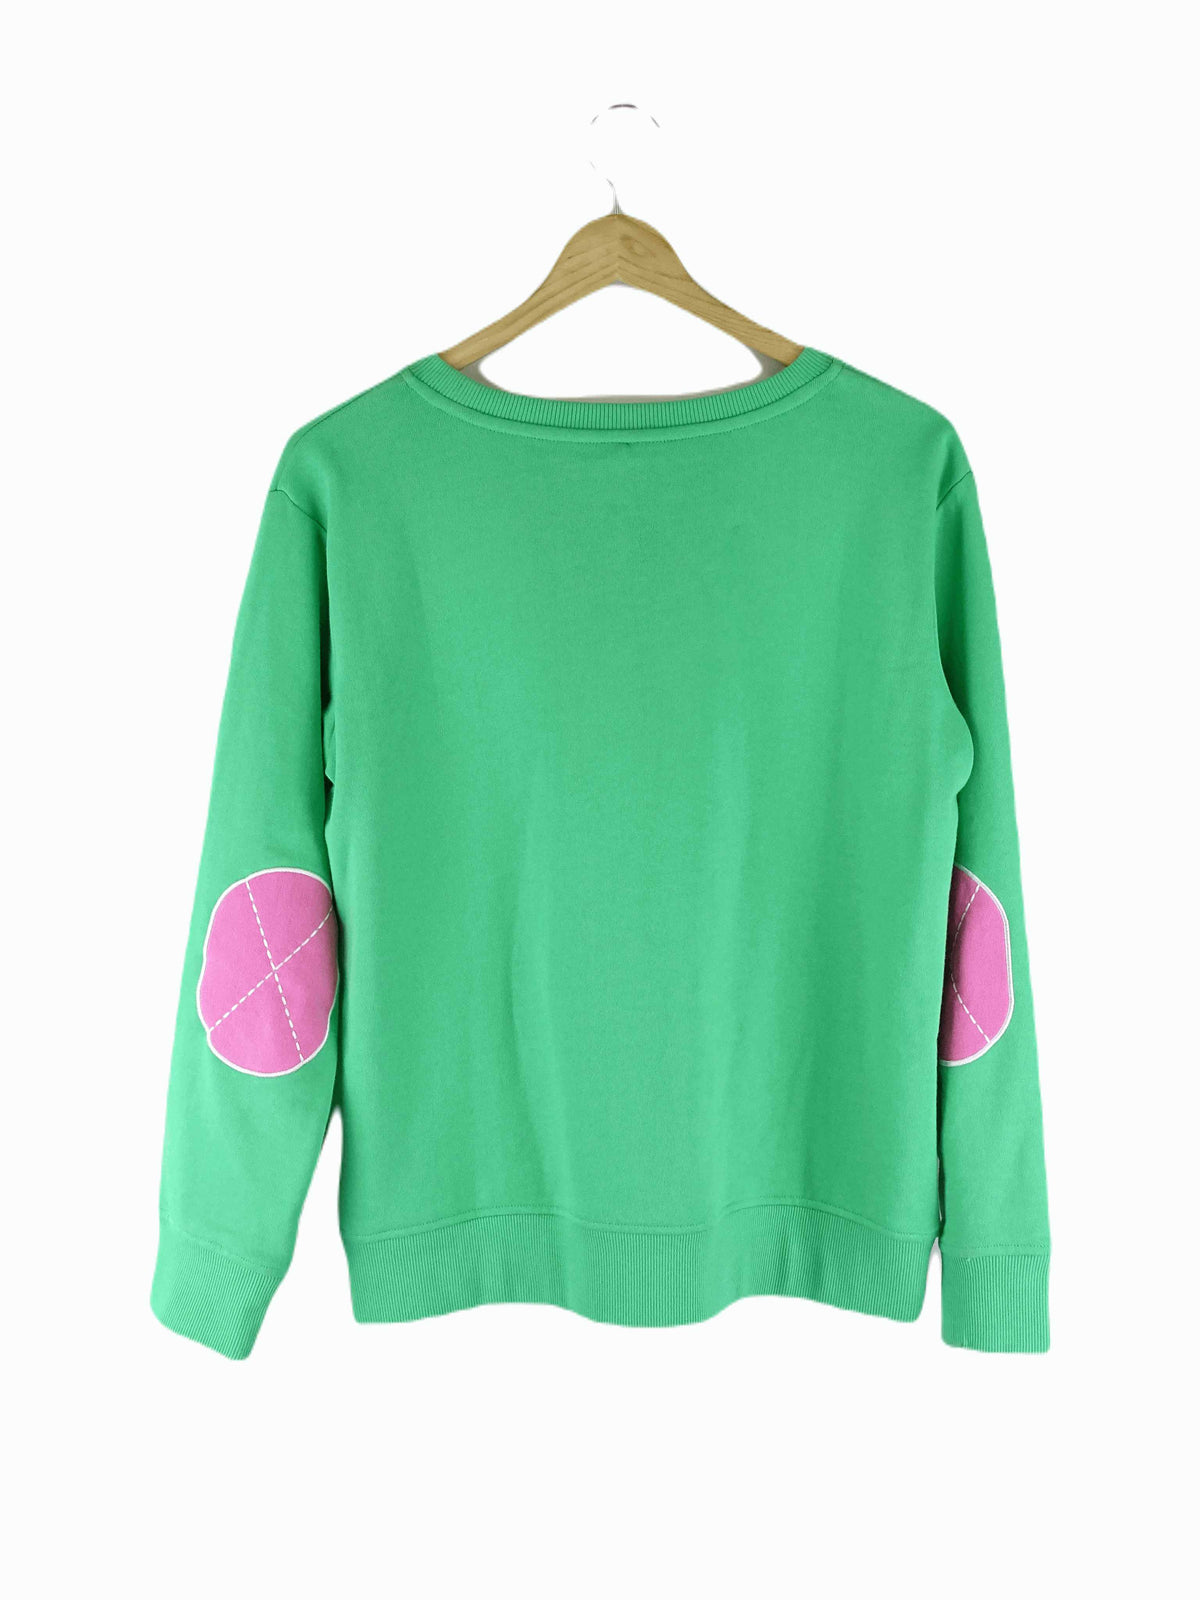 EST 1971 Green Sweater 1